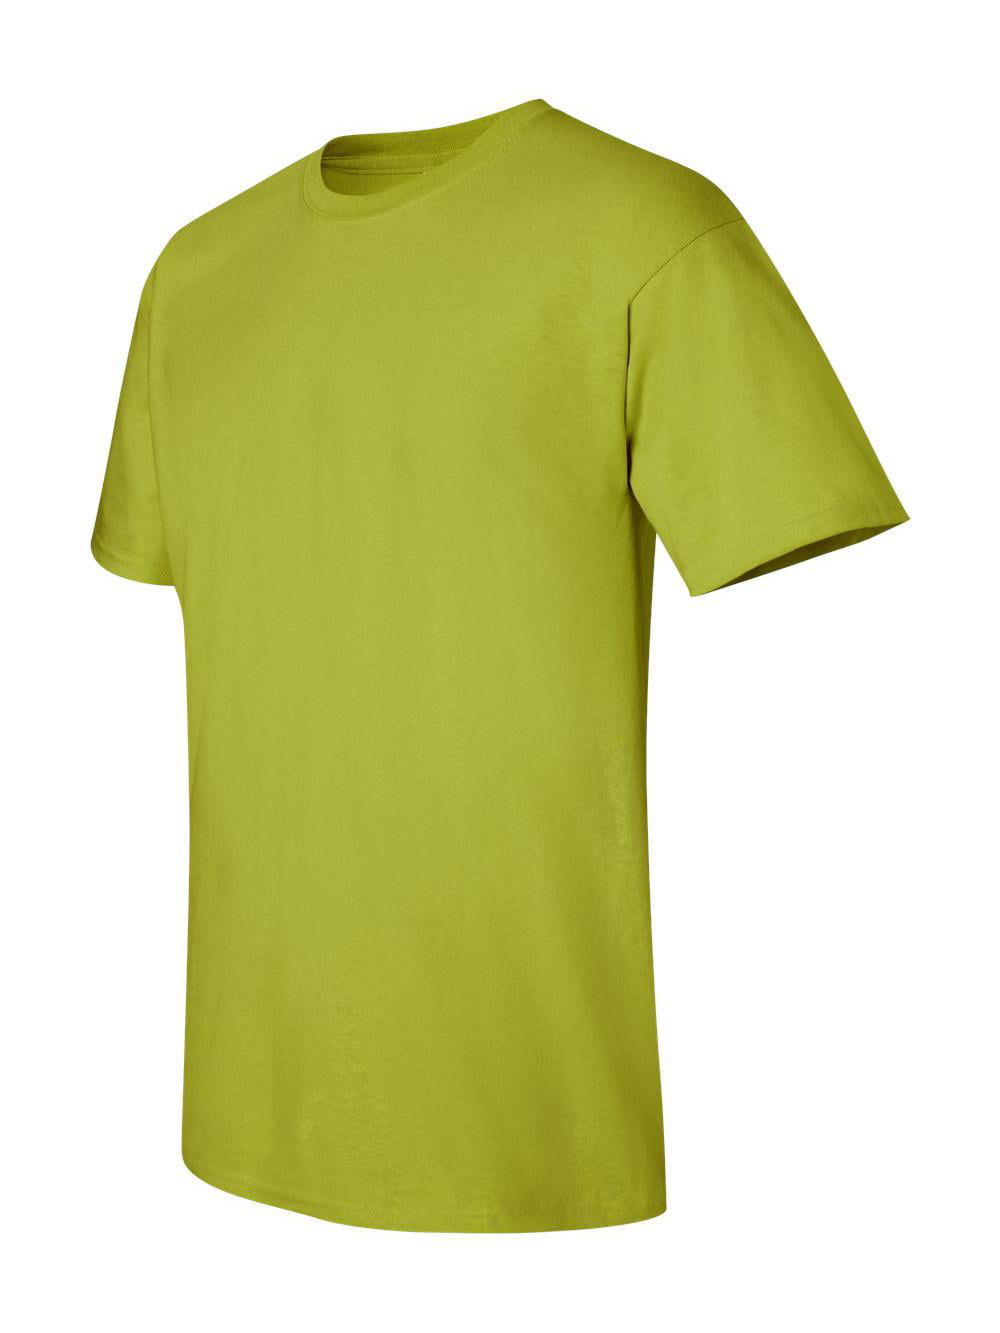 Gildan - Ultra Cotton T-Shirt - 2000 - Atlantis - Size: XL - Walmart.com